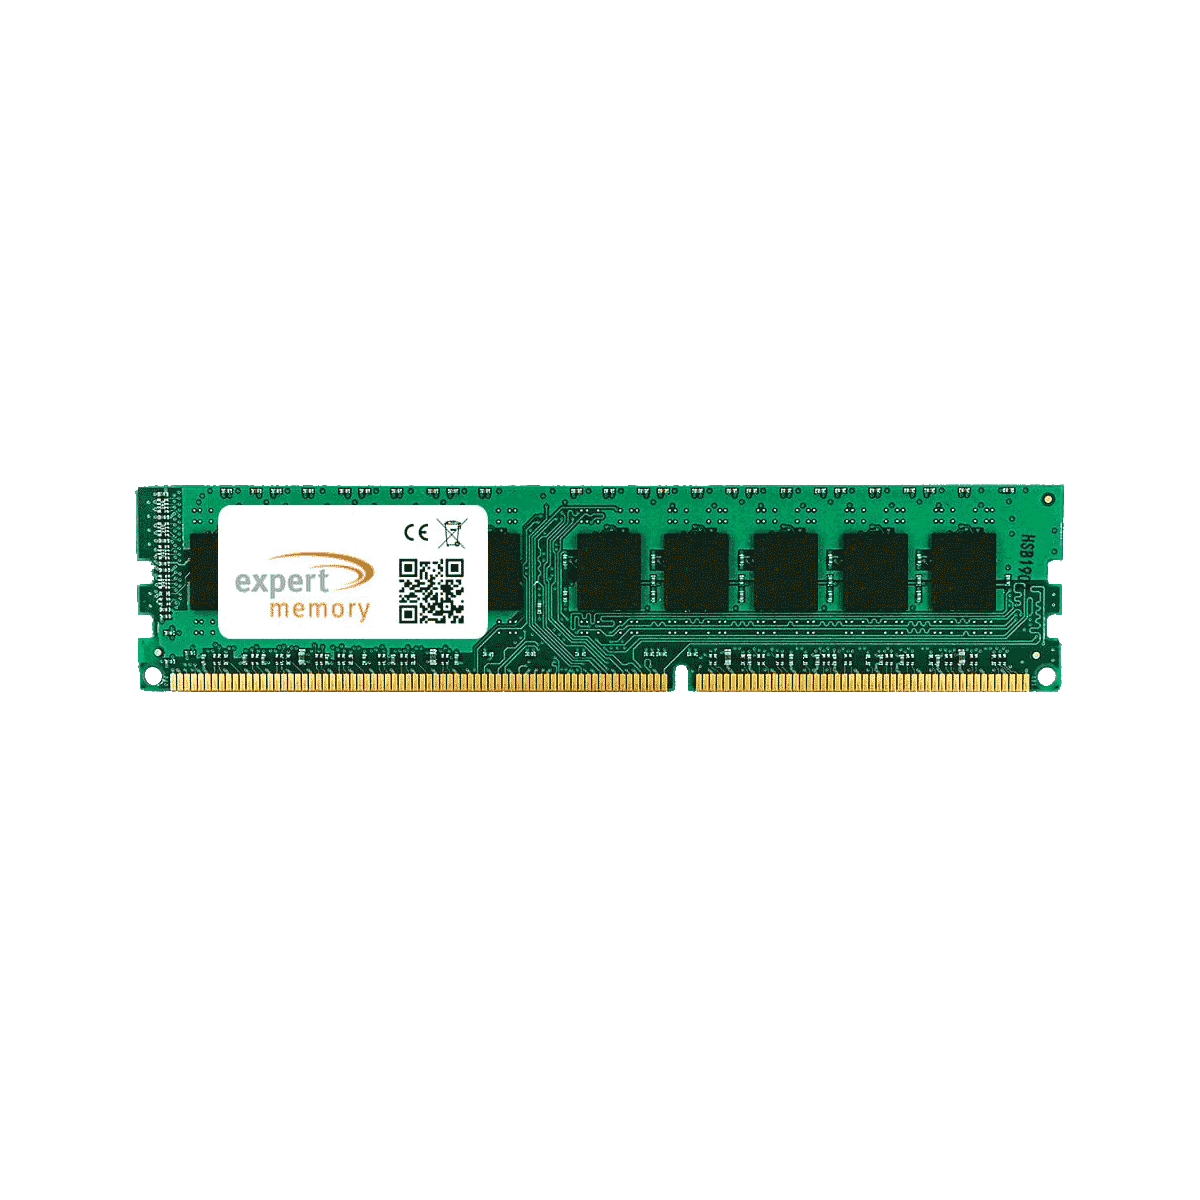 EXPERT MEMORY S2190 DDR3 Memory PC 4 Bell RAM Upgrade GB IMedia Packard 4GB